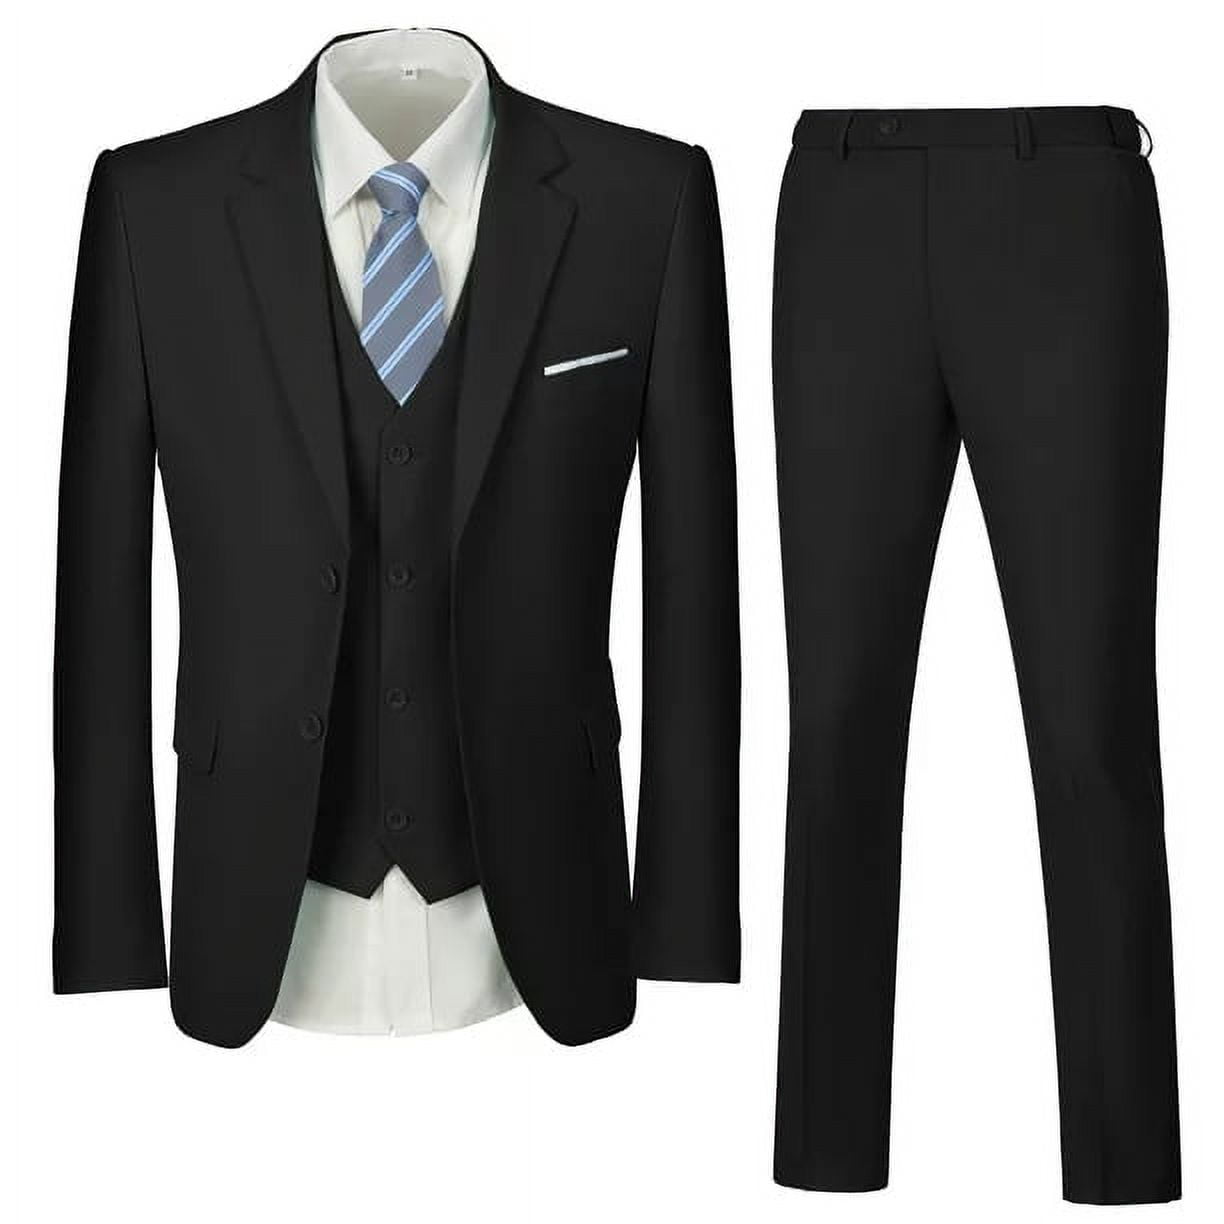 1/12 Scale Male Clothes 3pcs Set Black Slim Vest Jacket and Overalls  Trousers Suit for